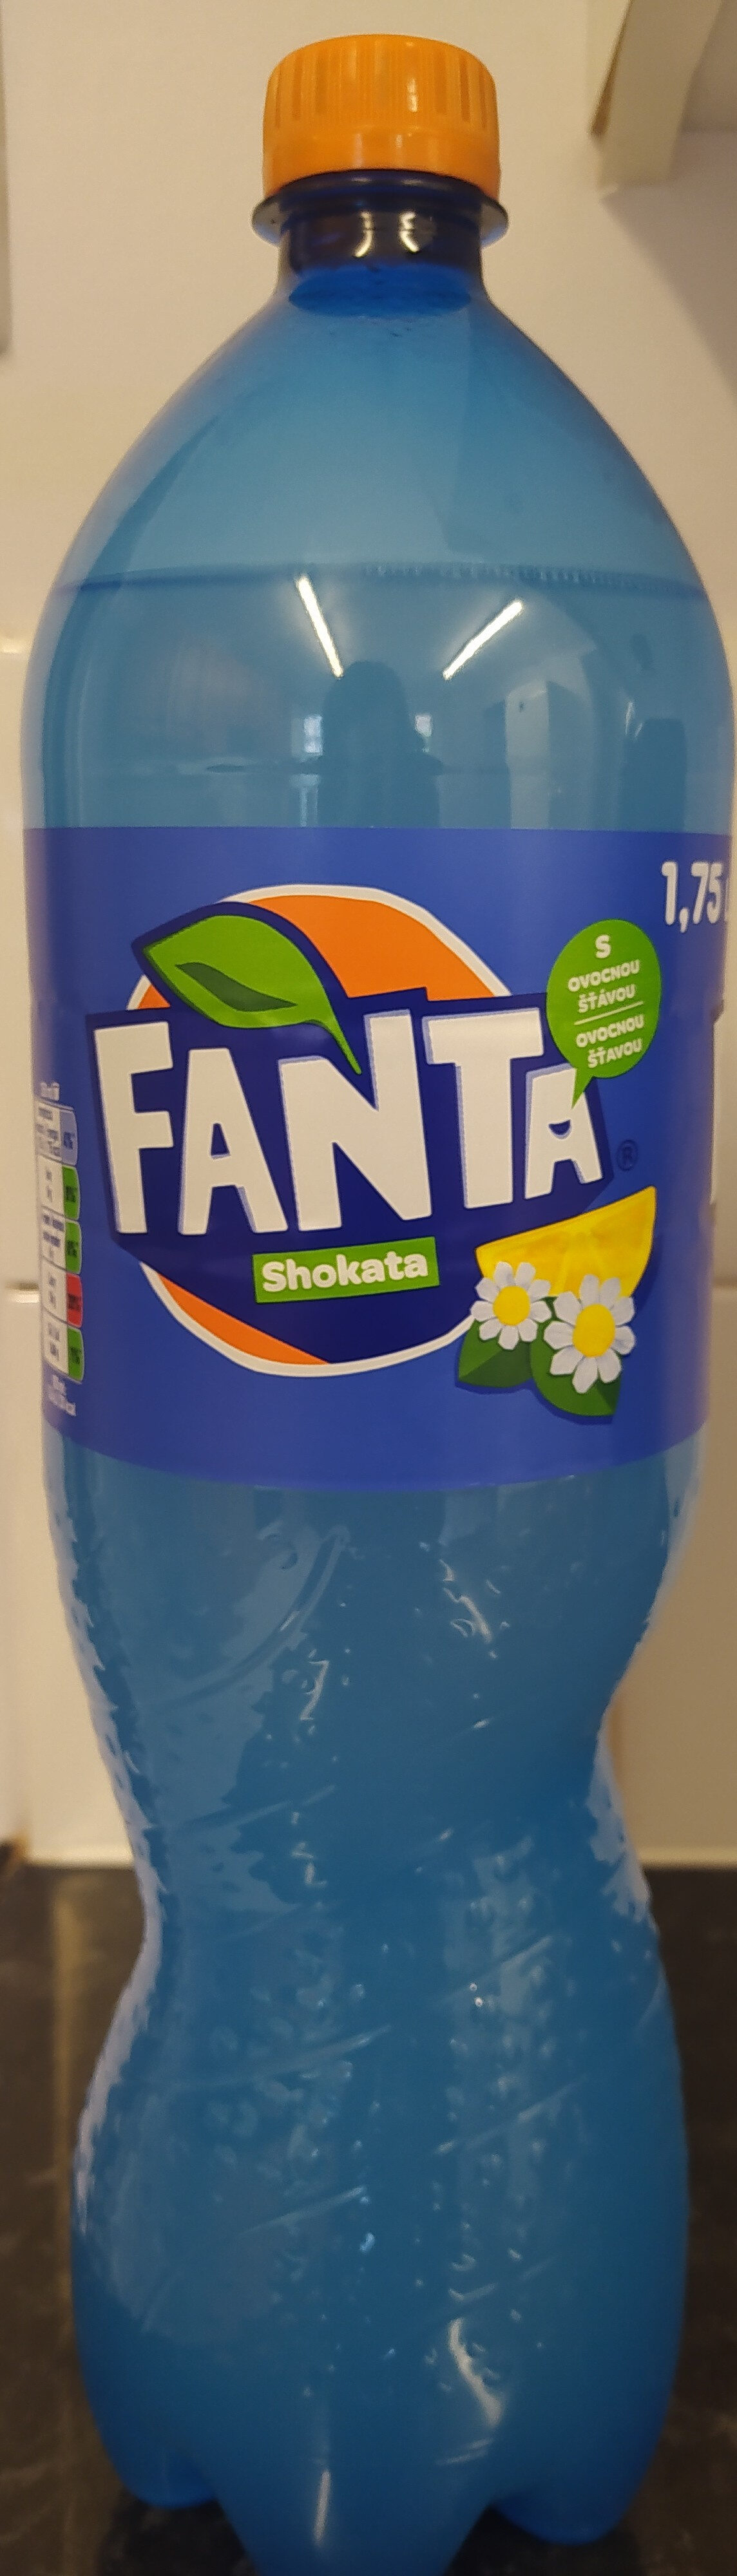 Fanta Shokata - Produkt